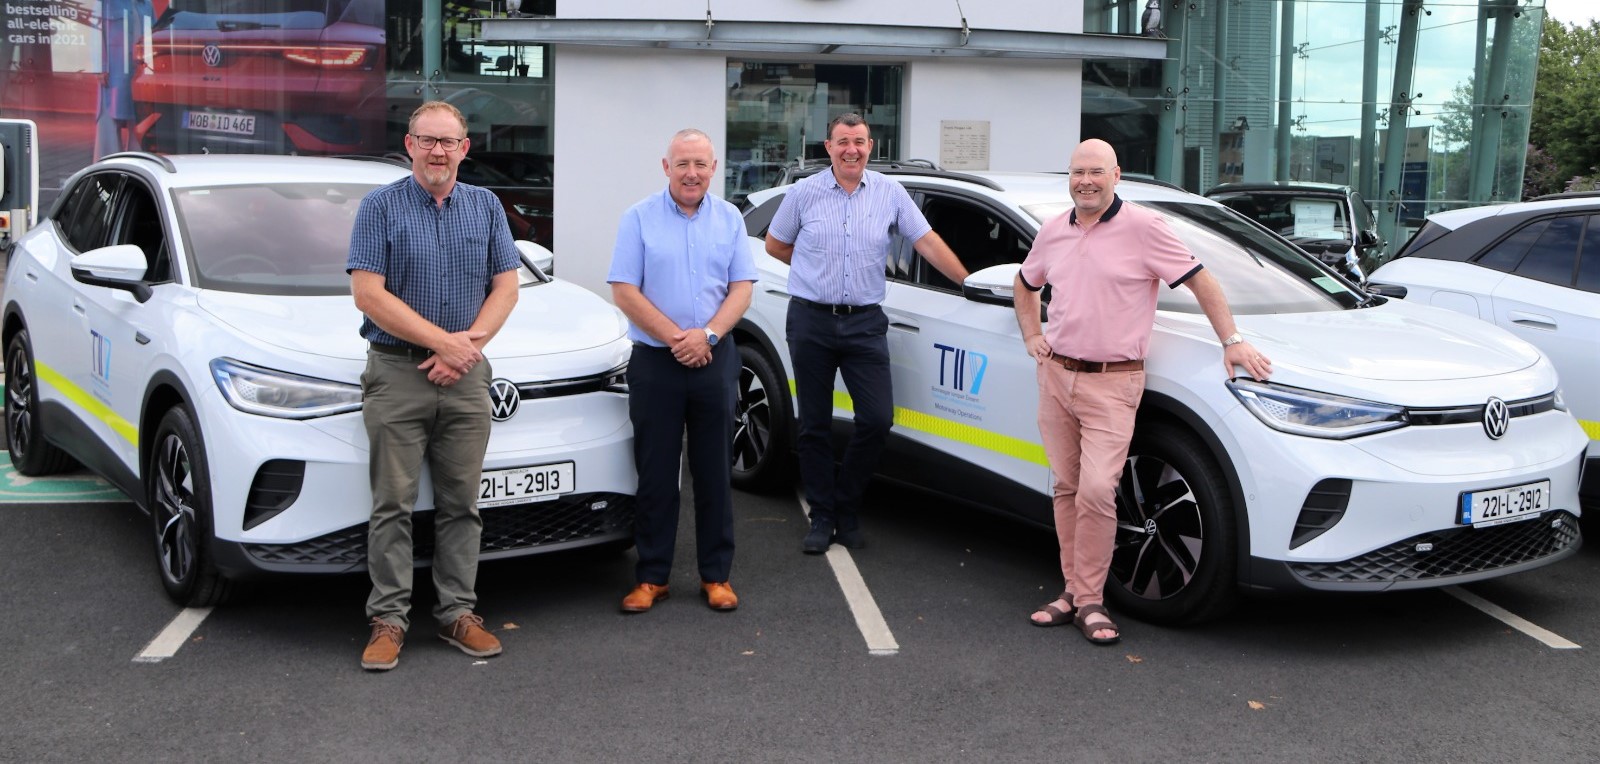 TII staff with EV Fleet of Volkswagen ID. 4 Electric Vehicles